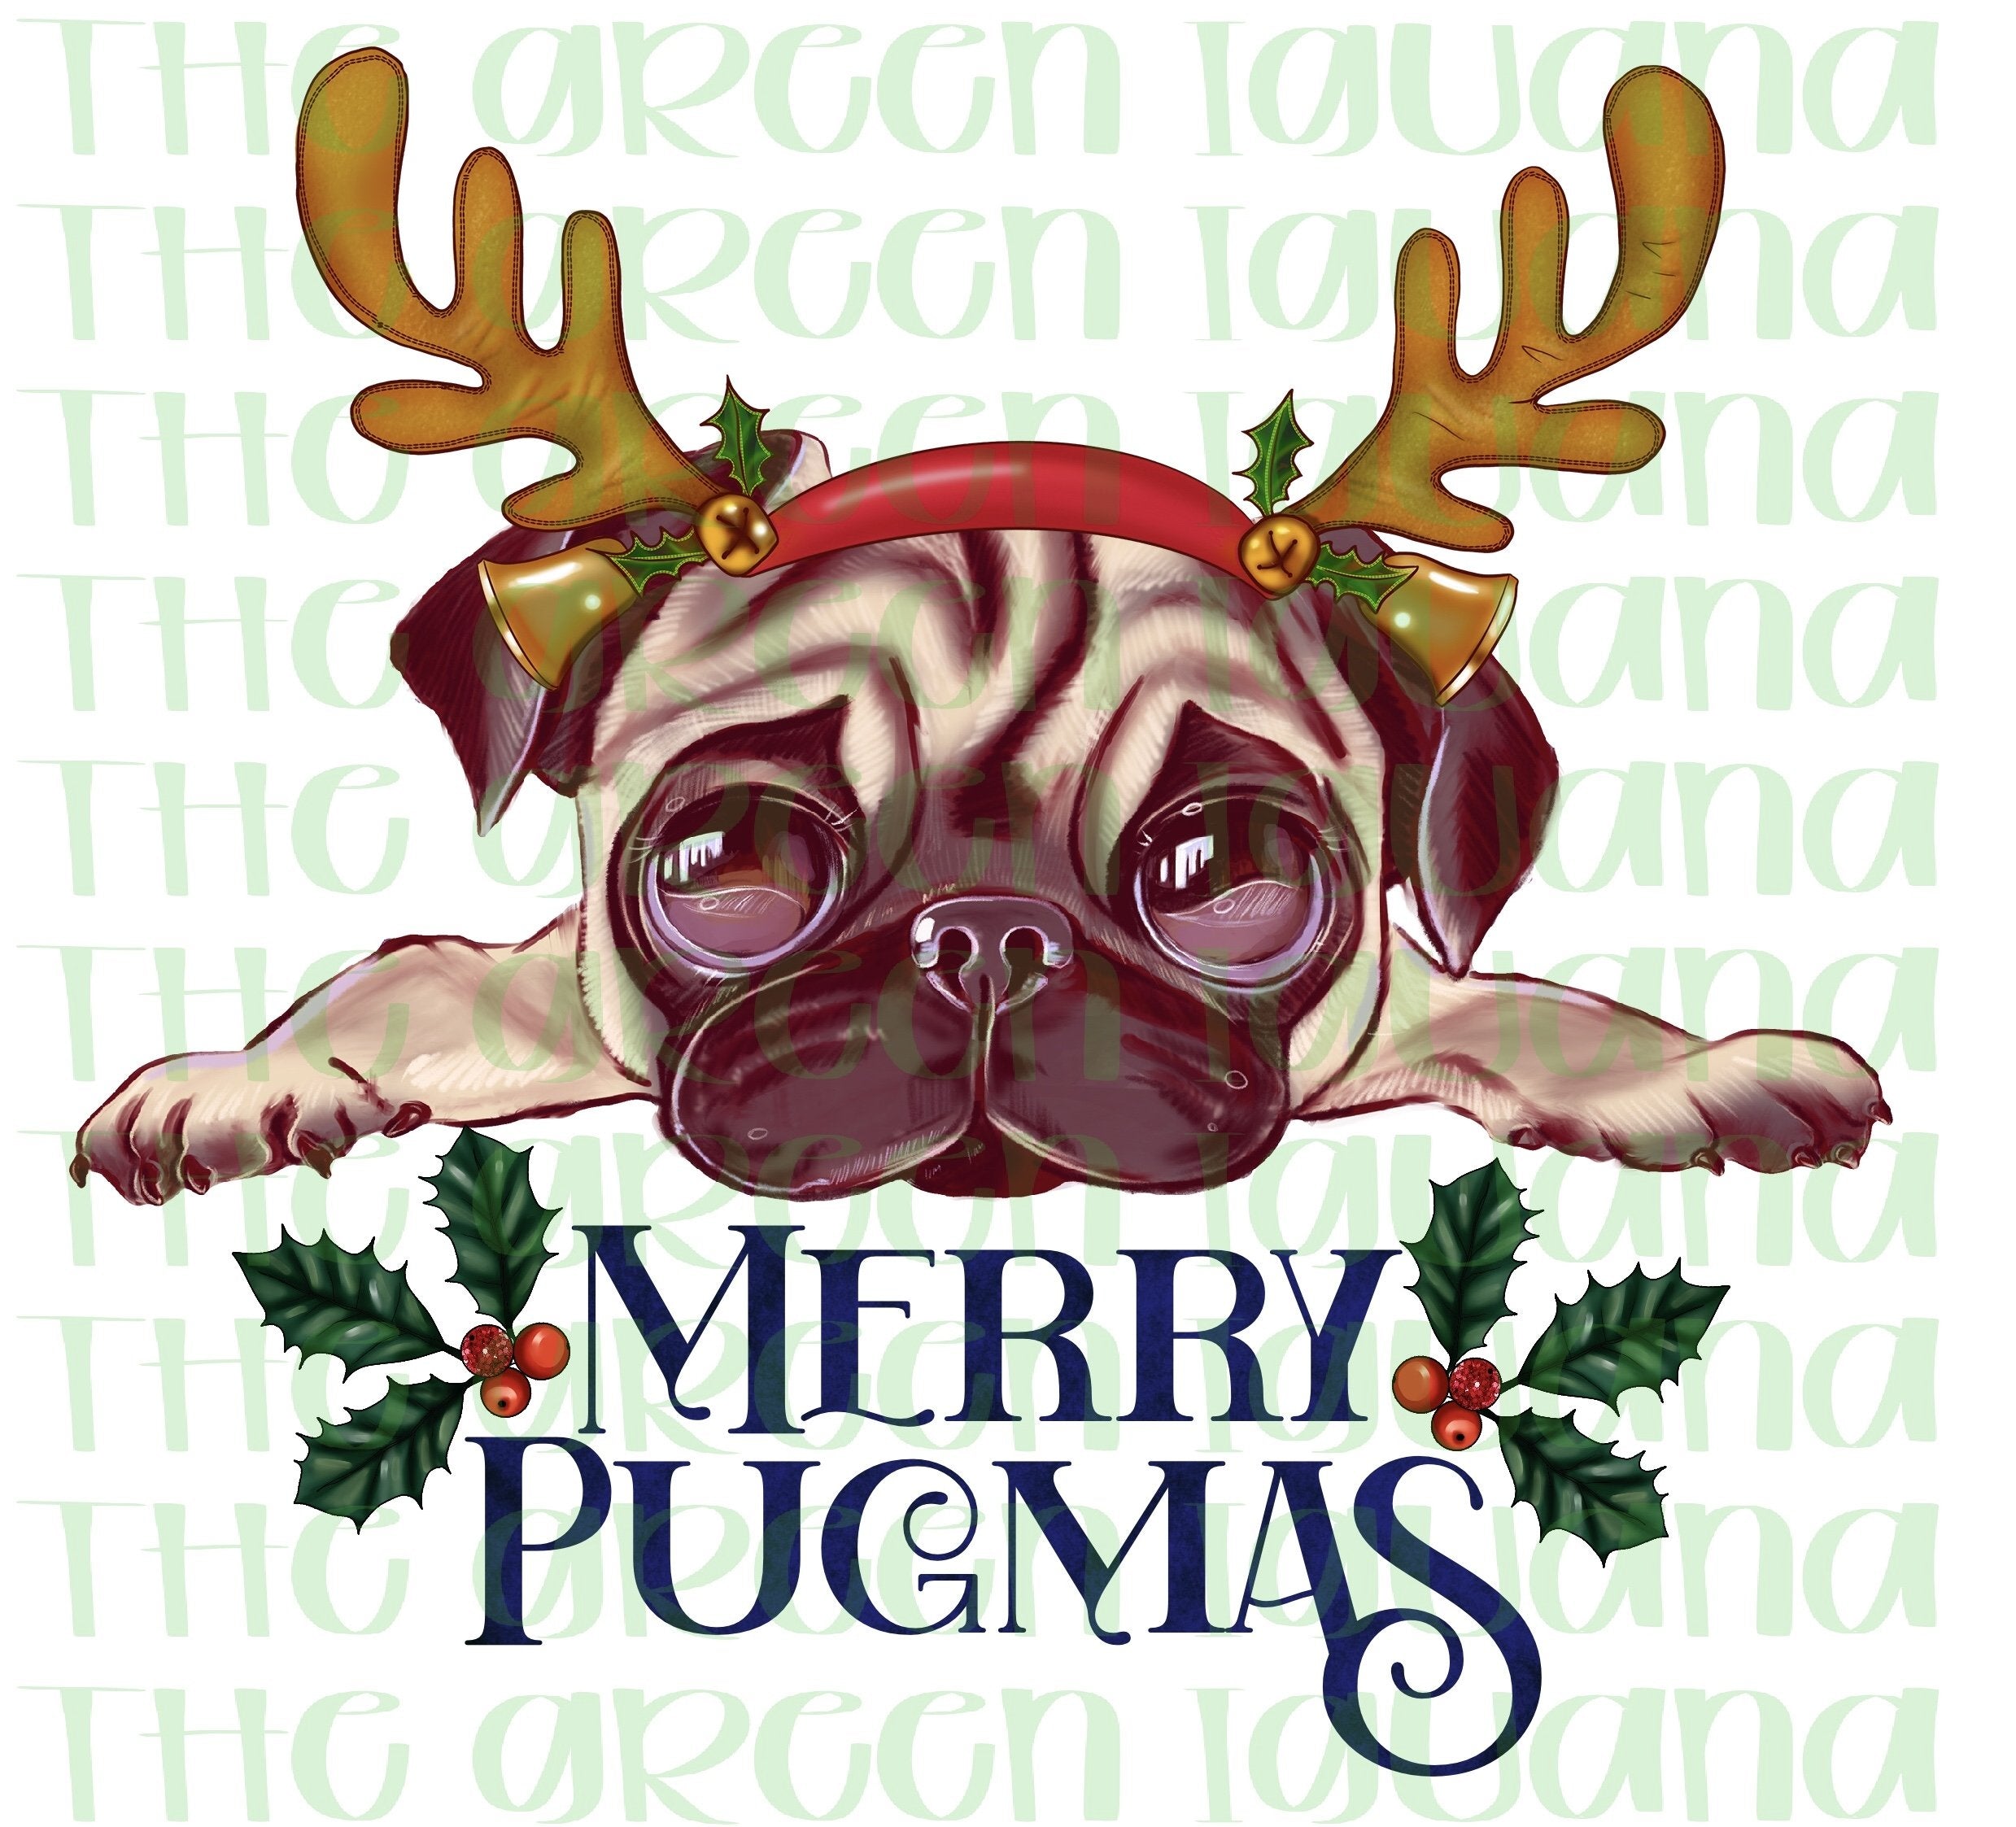 Merry Pugmas (reindeer)